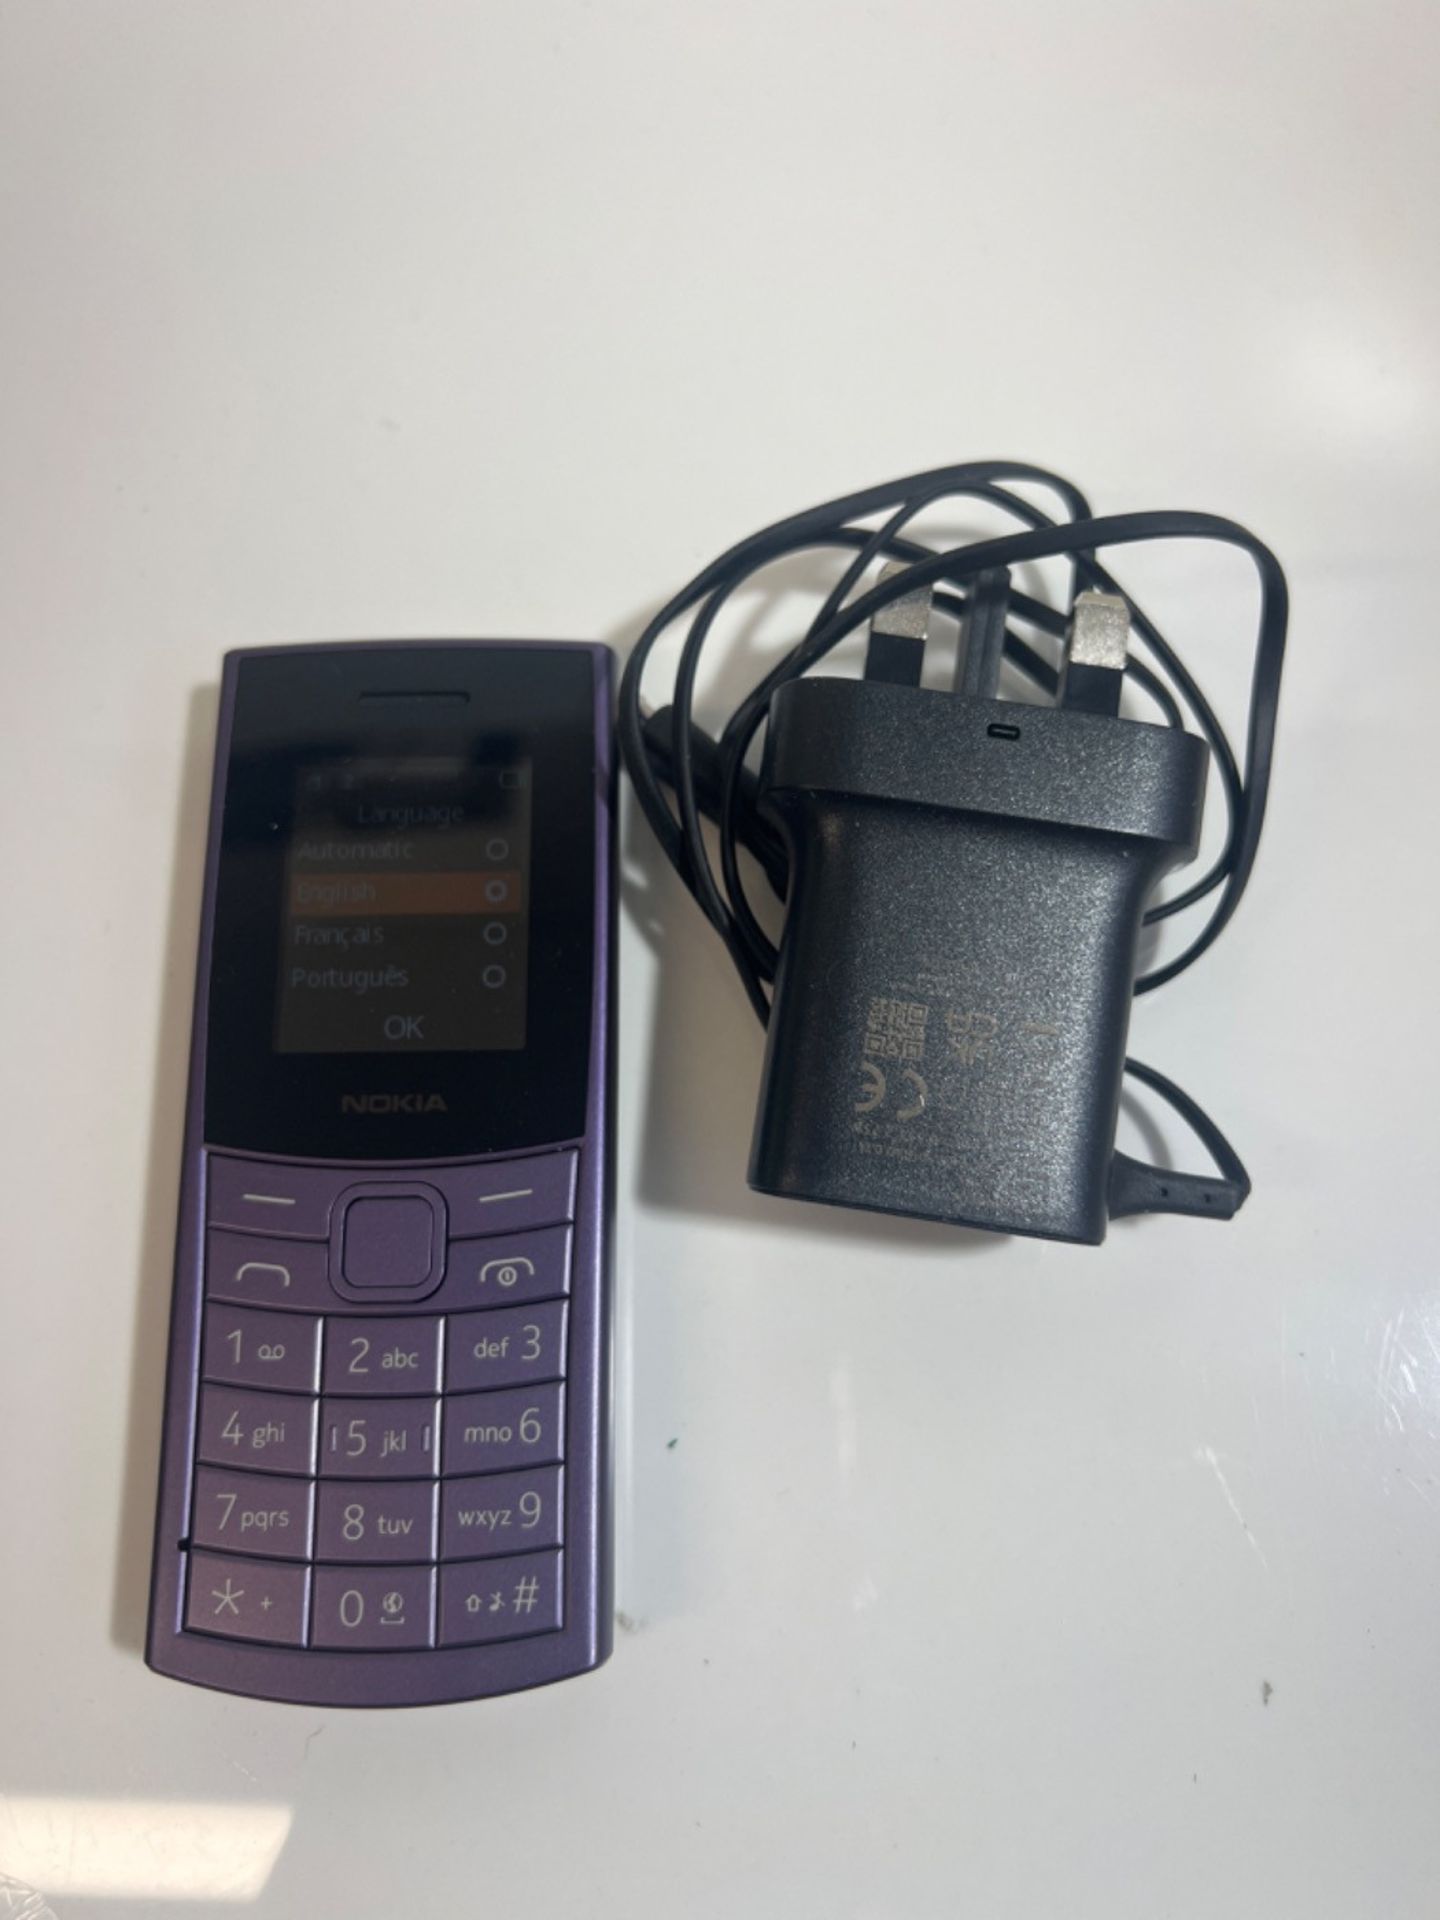 Nokia 110 4G Feature Phone With Camera, Bluetooth, FM radio, MP3 player, MicroSD, Long-Lasting Batt - Image 2 of 3